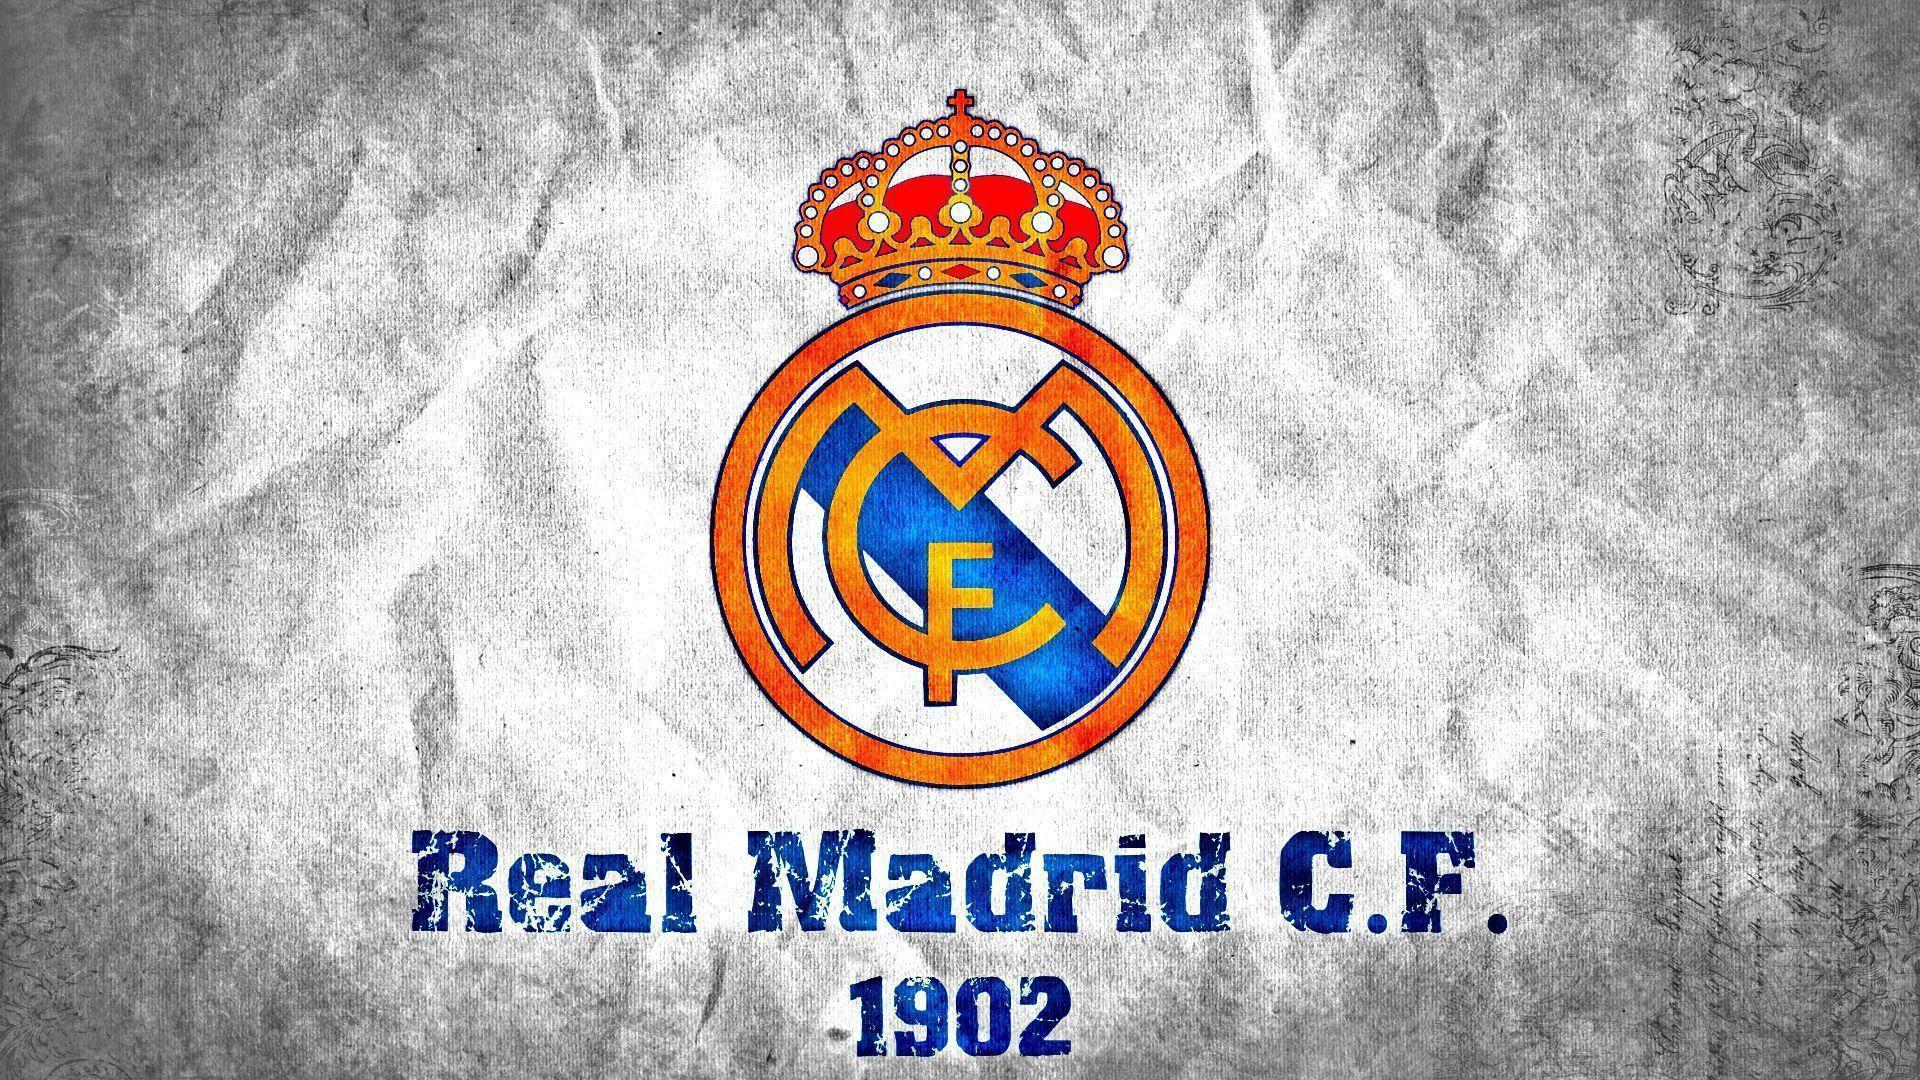 Real Madrid Wallpaper HD